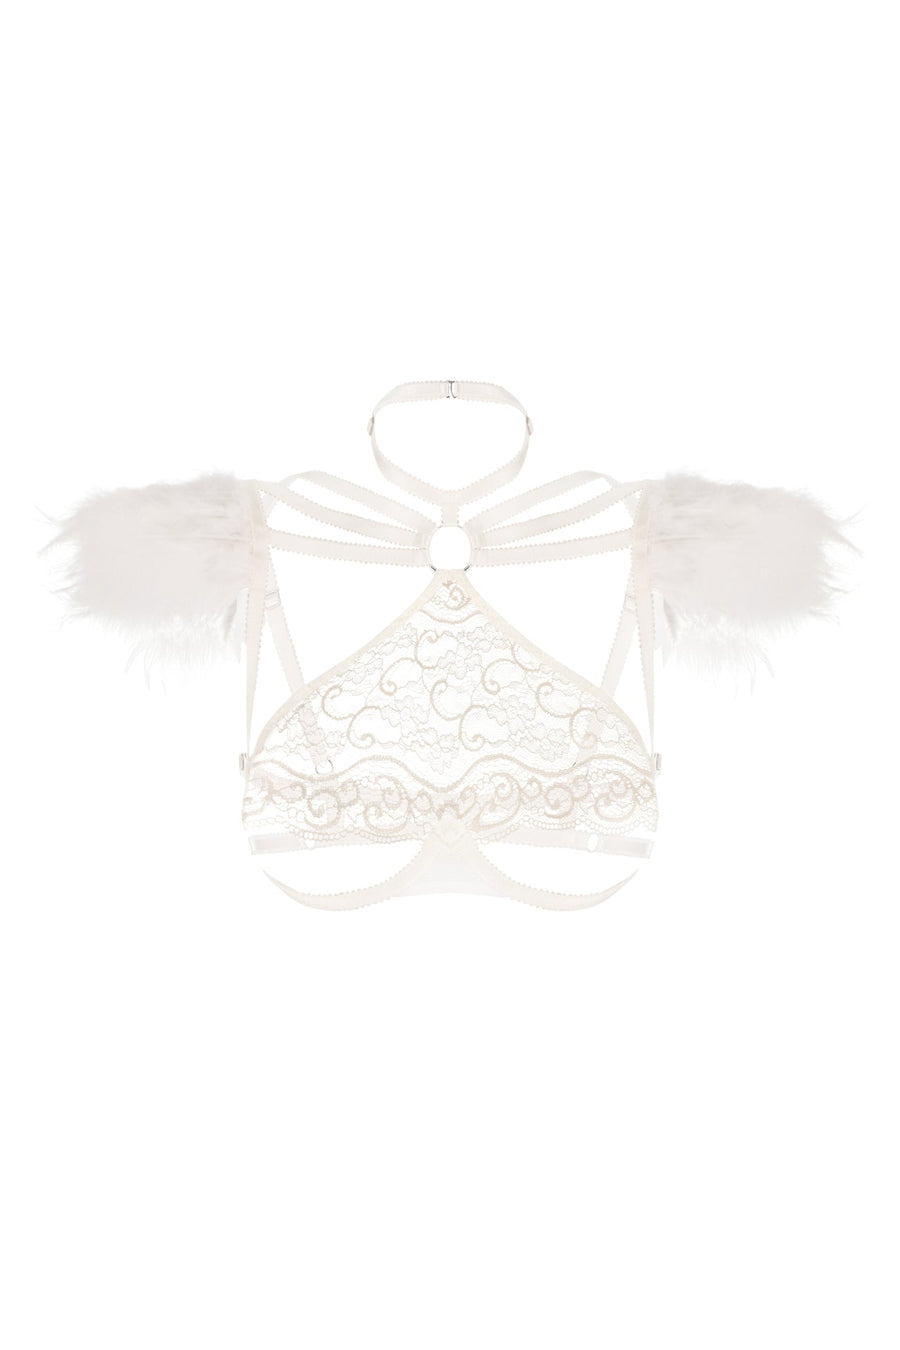 White Angel bra